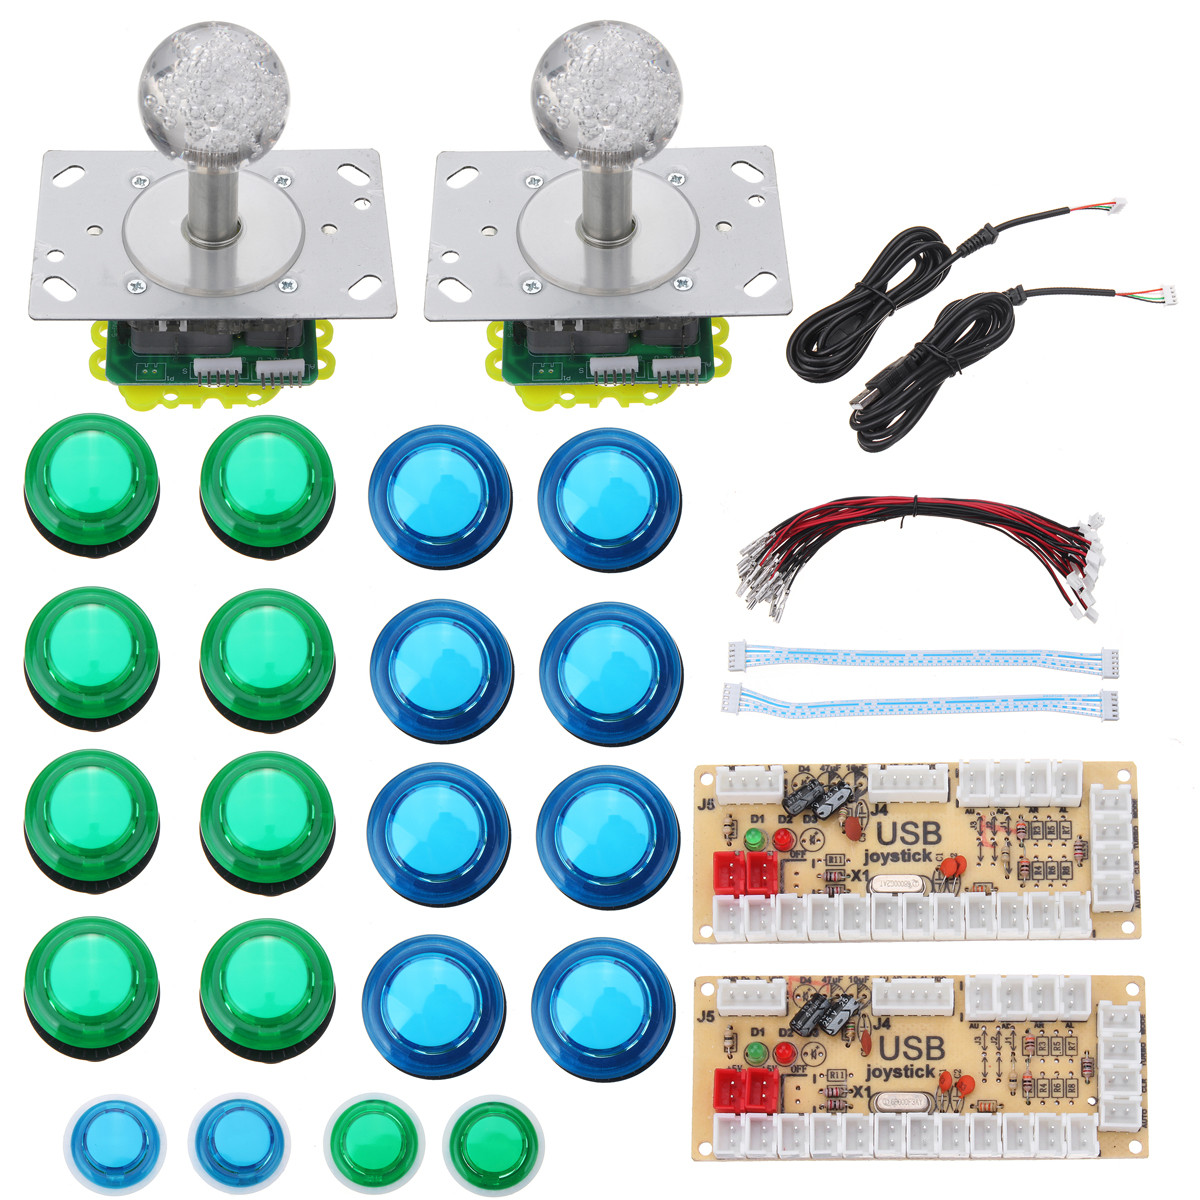 

Colorful LED Joystick Push Button USB Encoders Arcade Game Controller DIY Kit